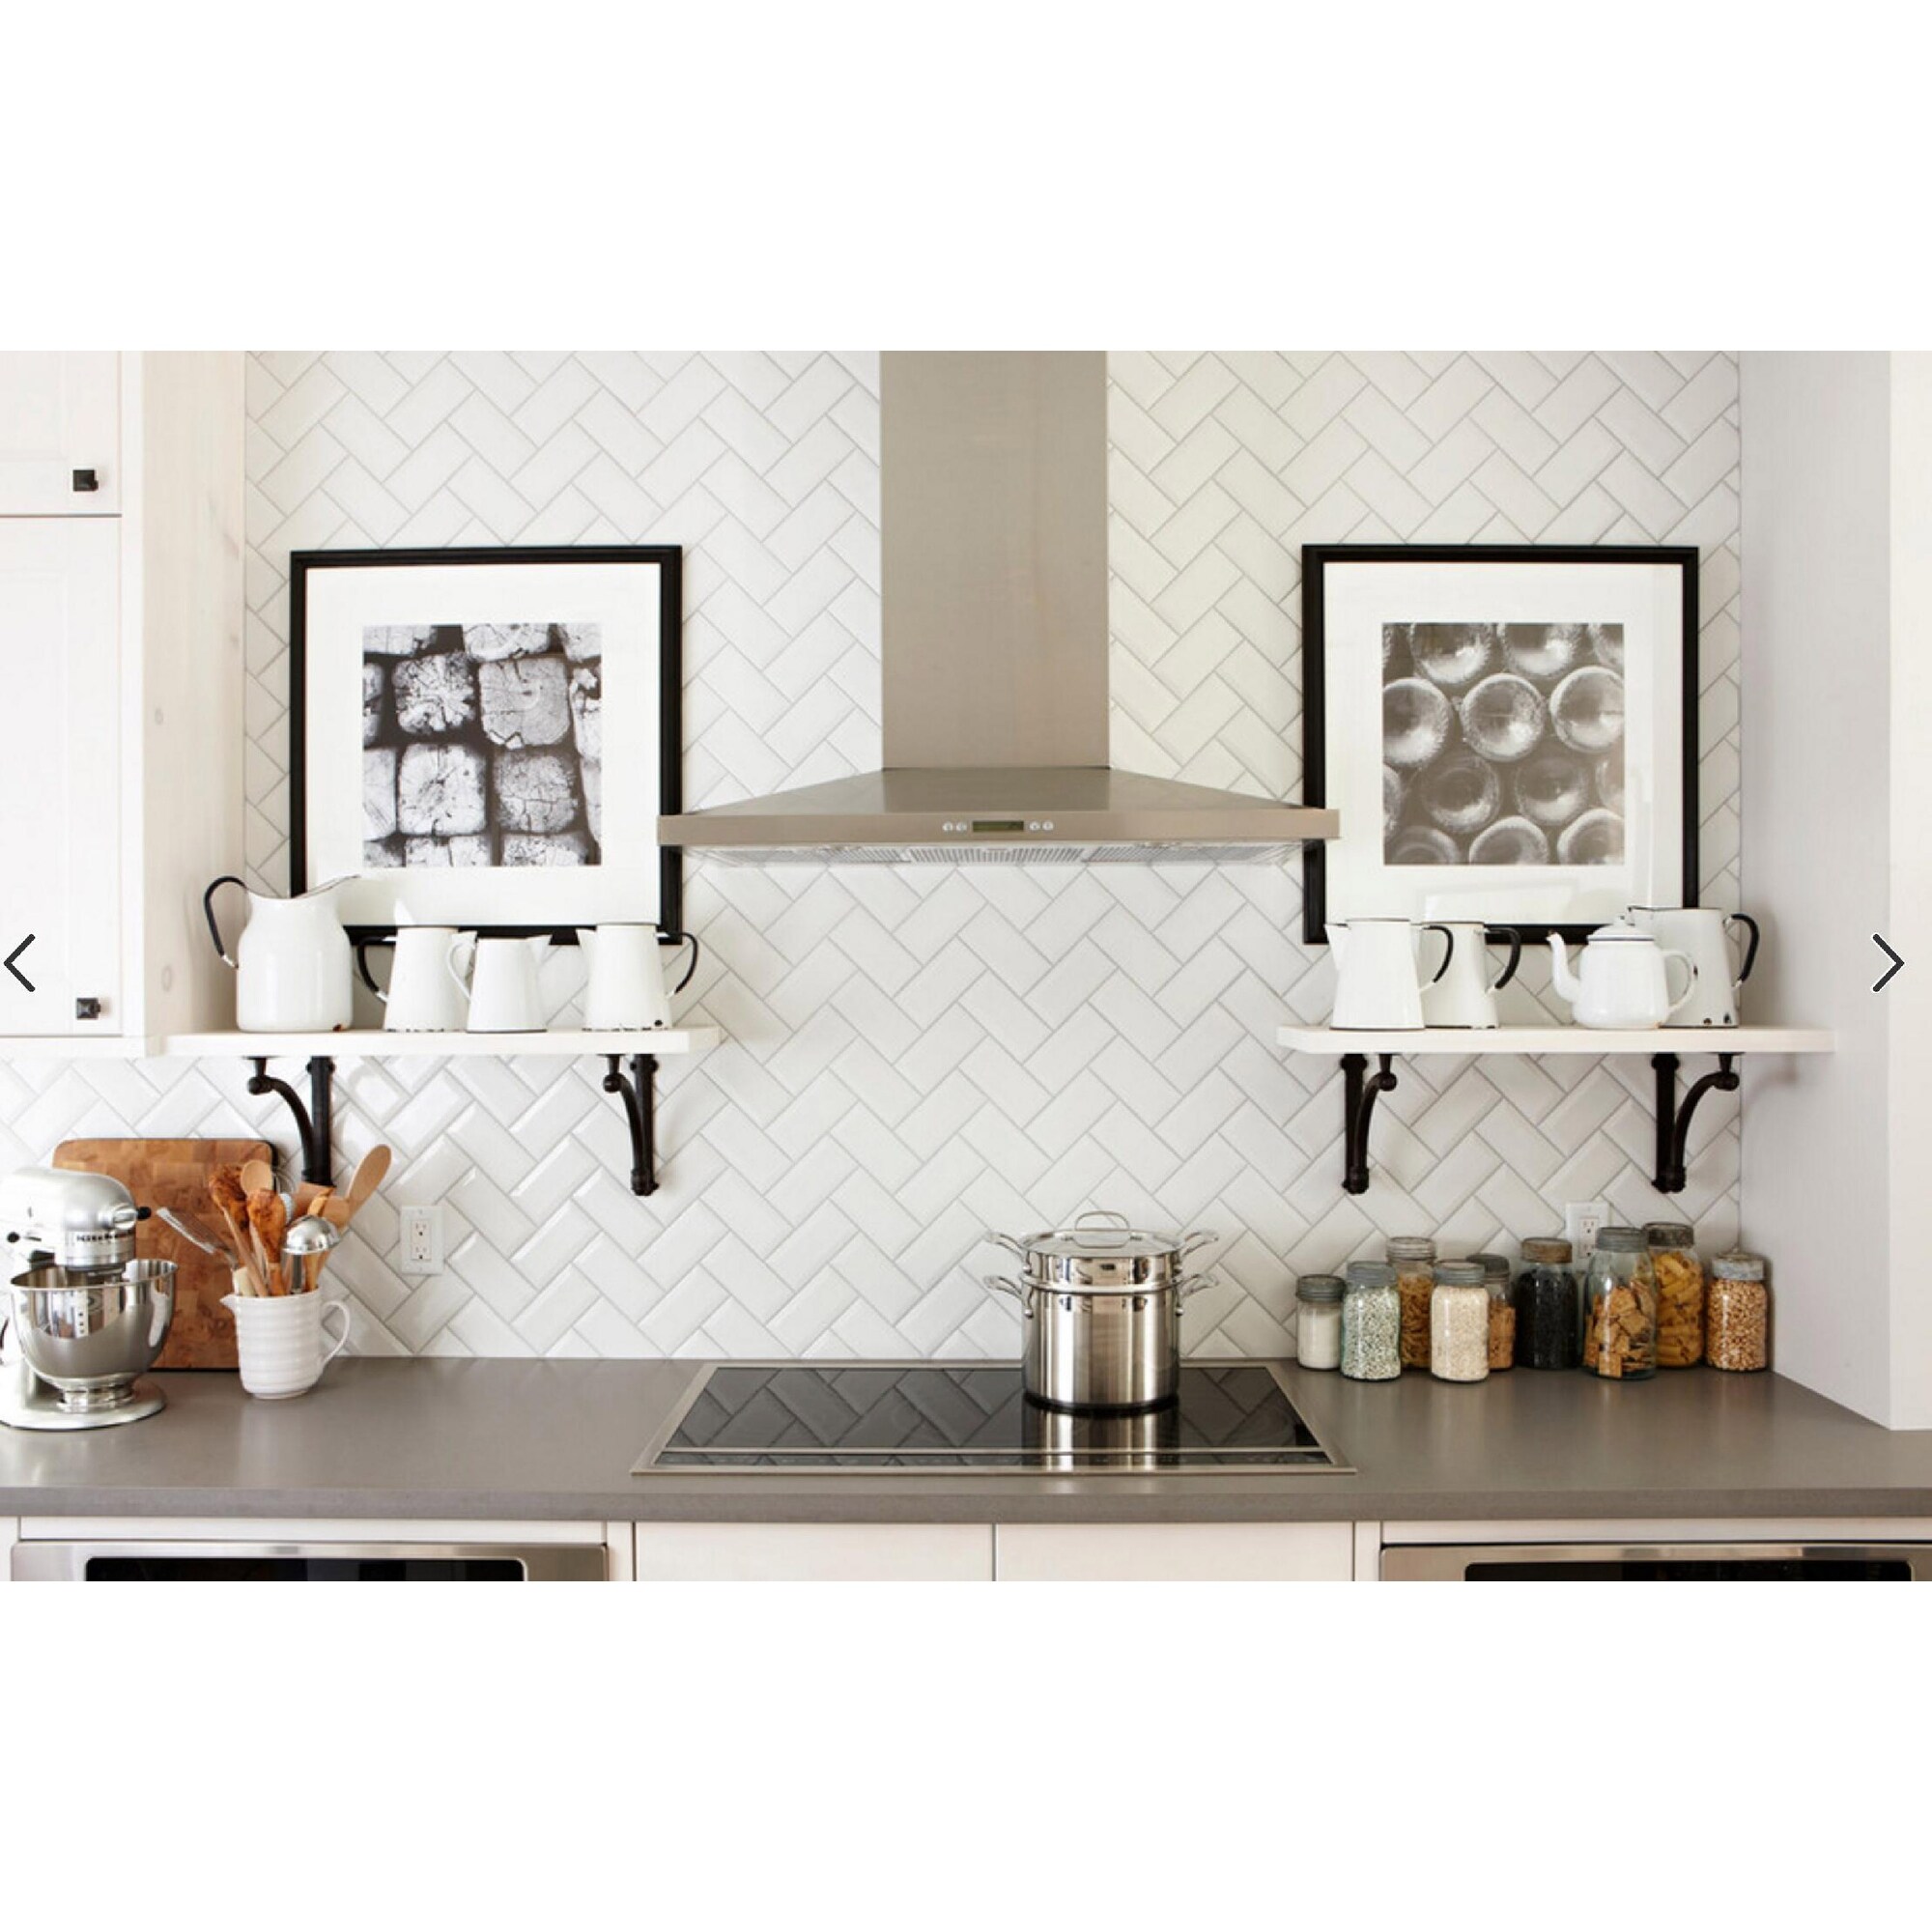 Art3d 3x 6 Peel And Stick Glass Tiles For Kitchen Backsplash